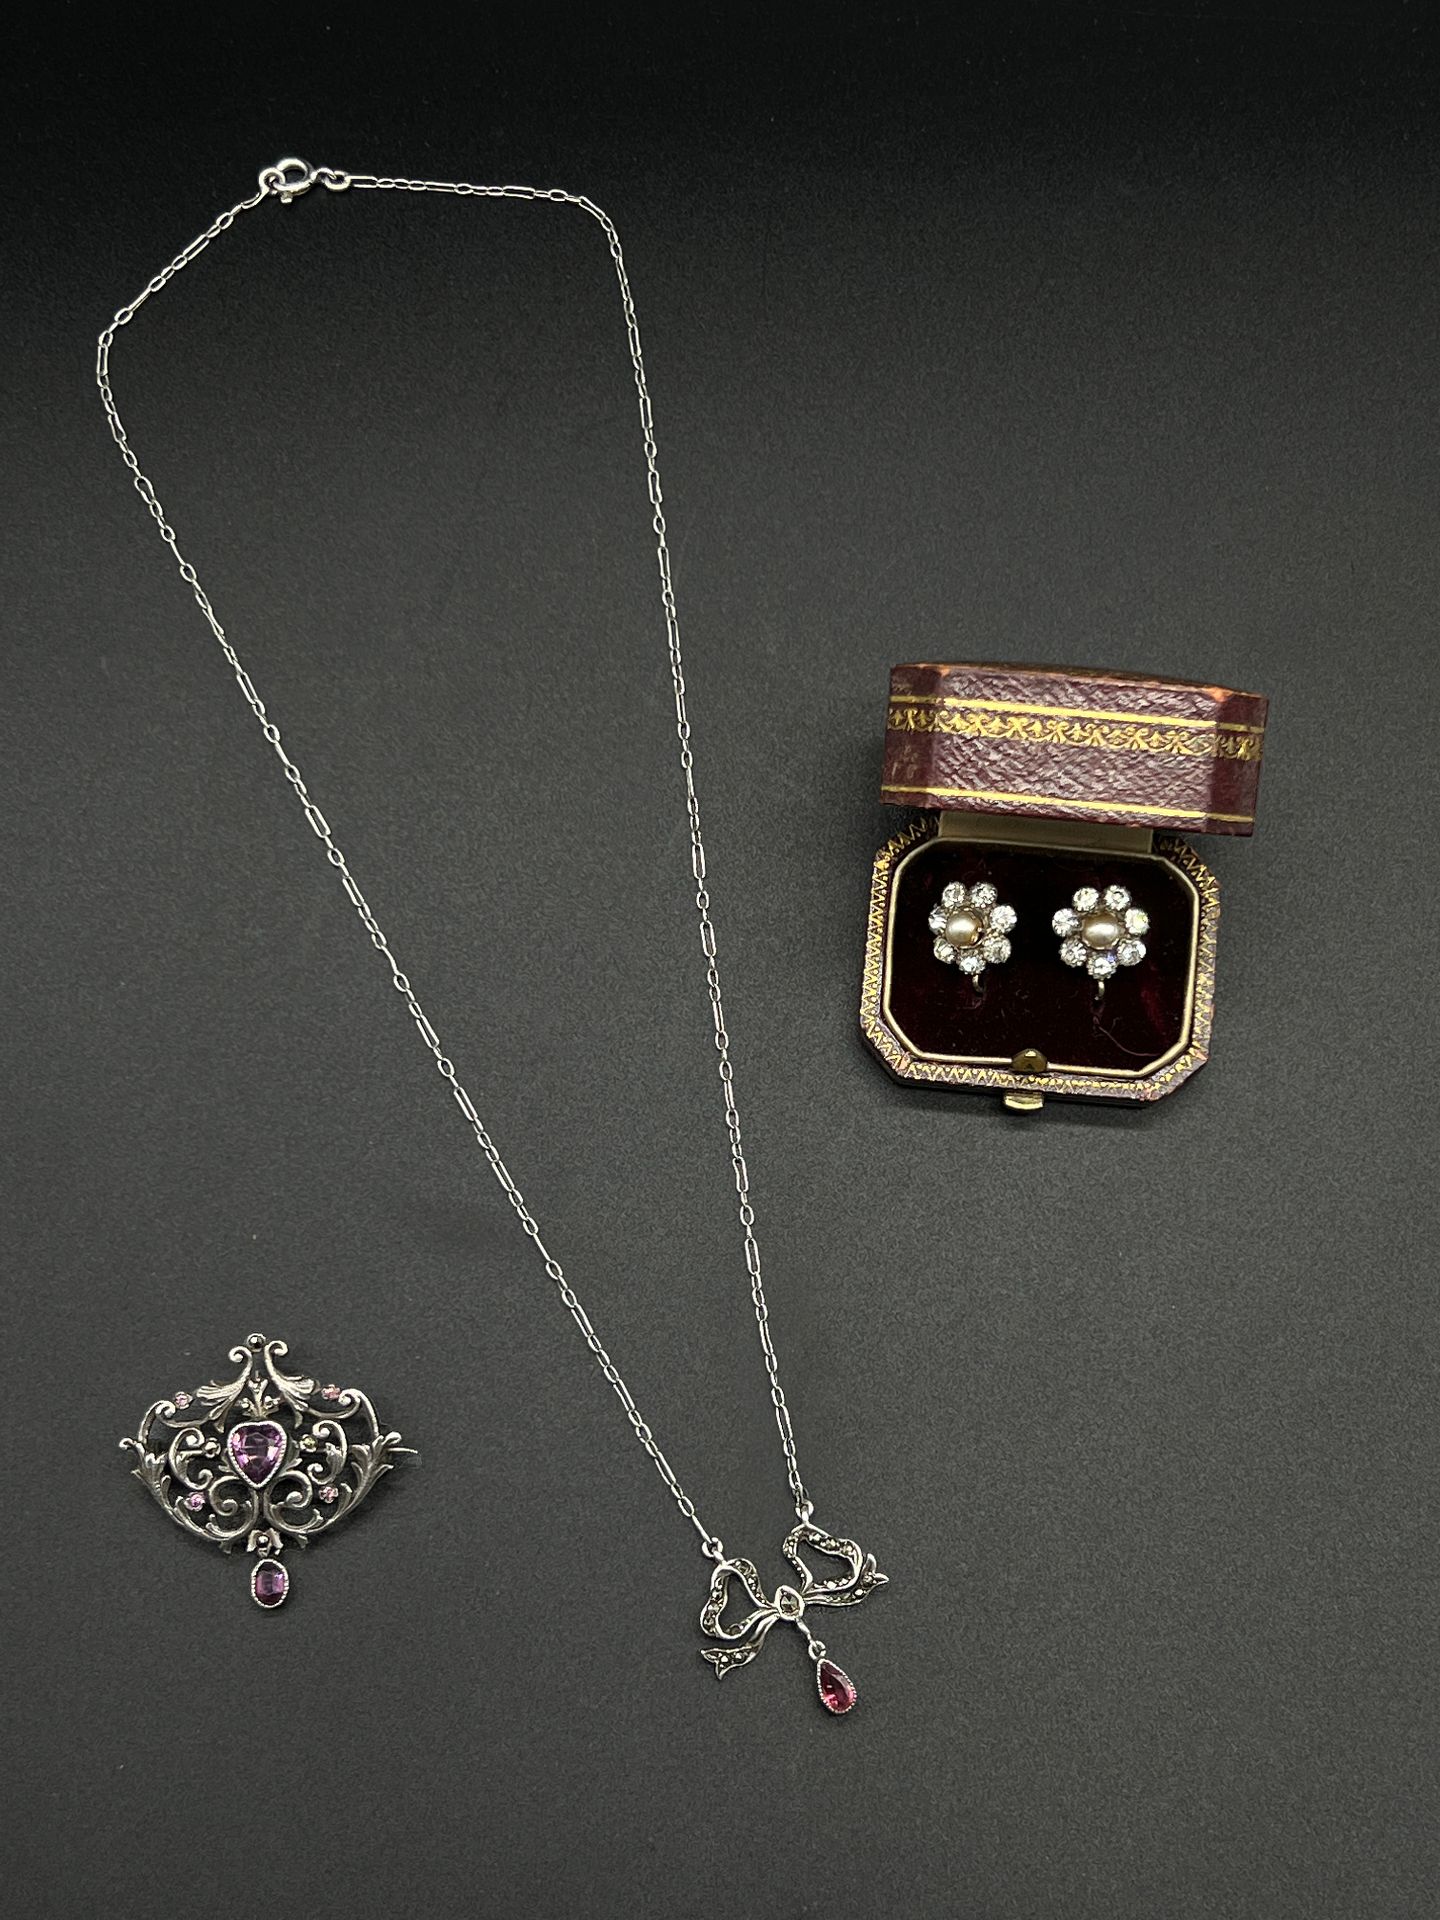 Null 一批珠宝，包括一条银项链和一个带紫罗兰石的胸针（925）。

19世纪末-20世纪初的作品。

P.毛重：11克。

一个加入了:

一对镀金金属、水&hellip;